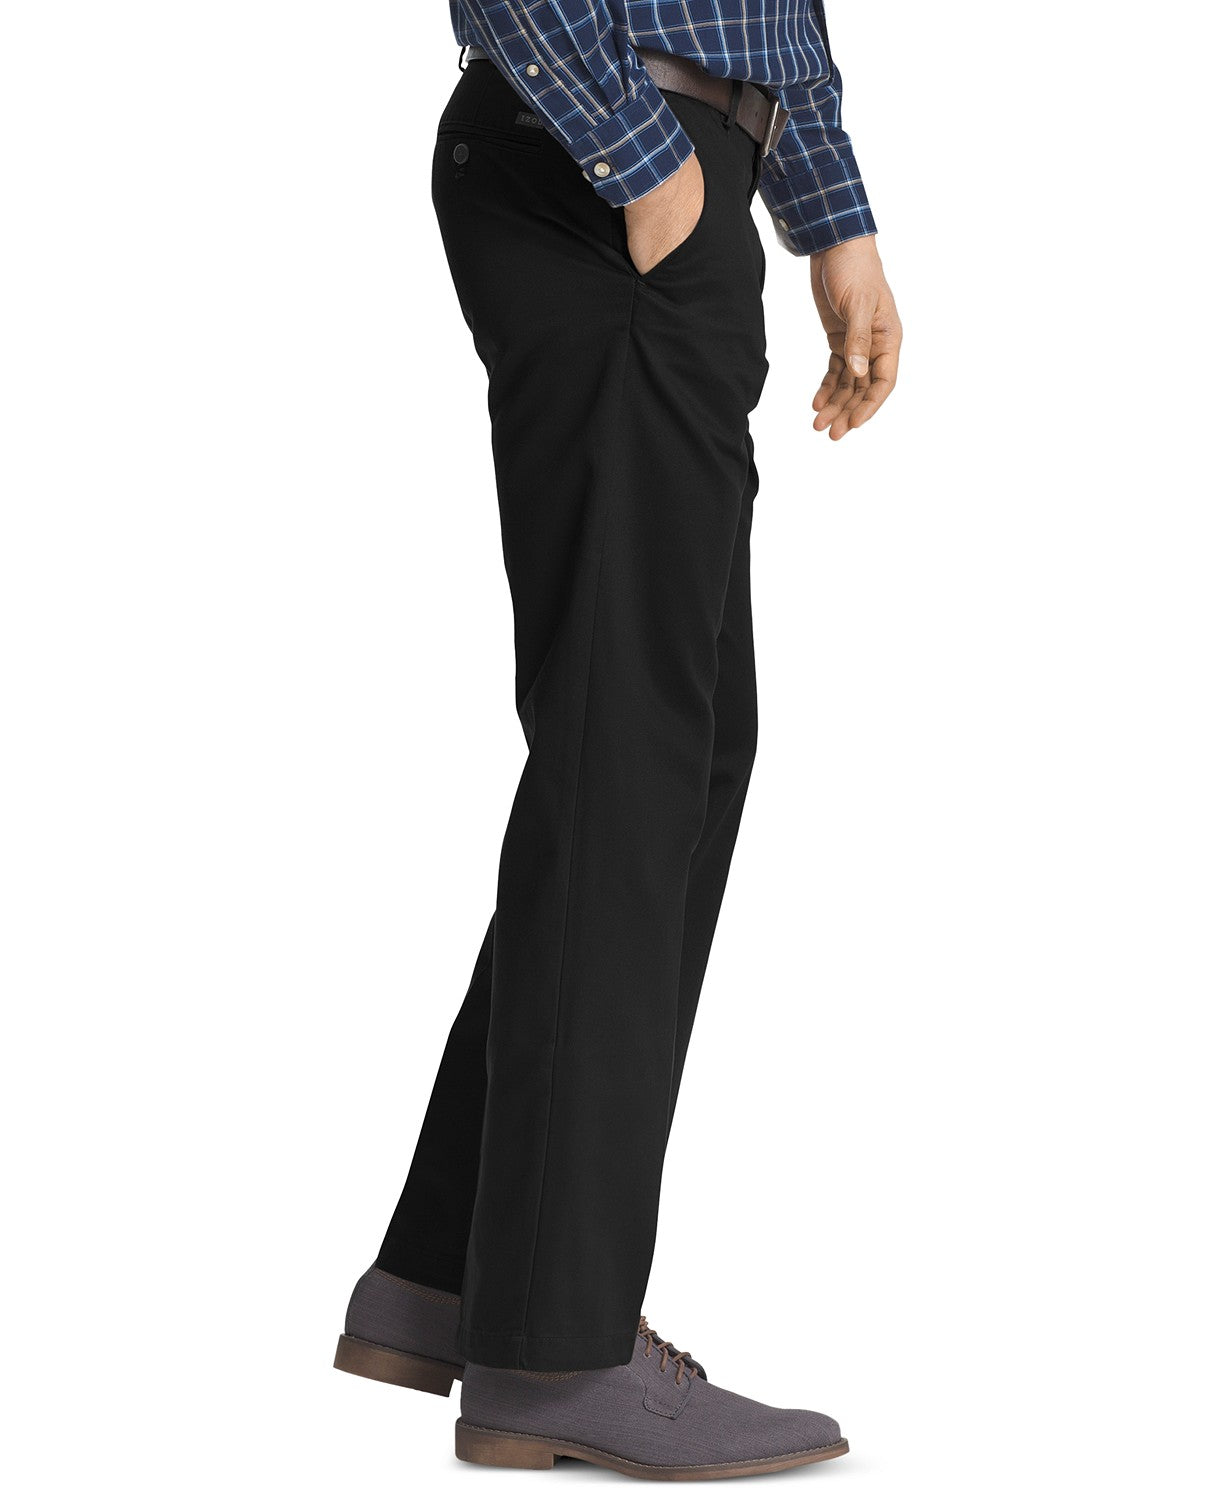 IZOD Men's American Straight-Fit Flat Front Chino Pants 32 X 34 Black